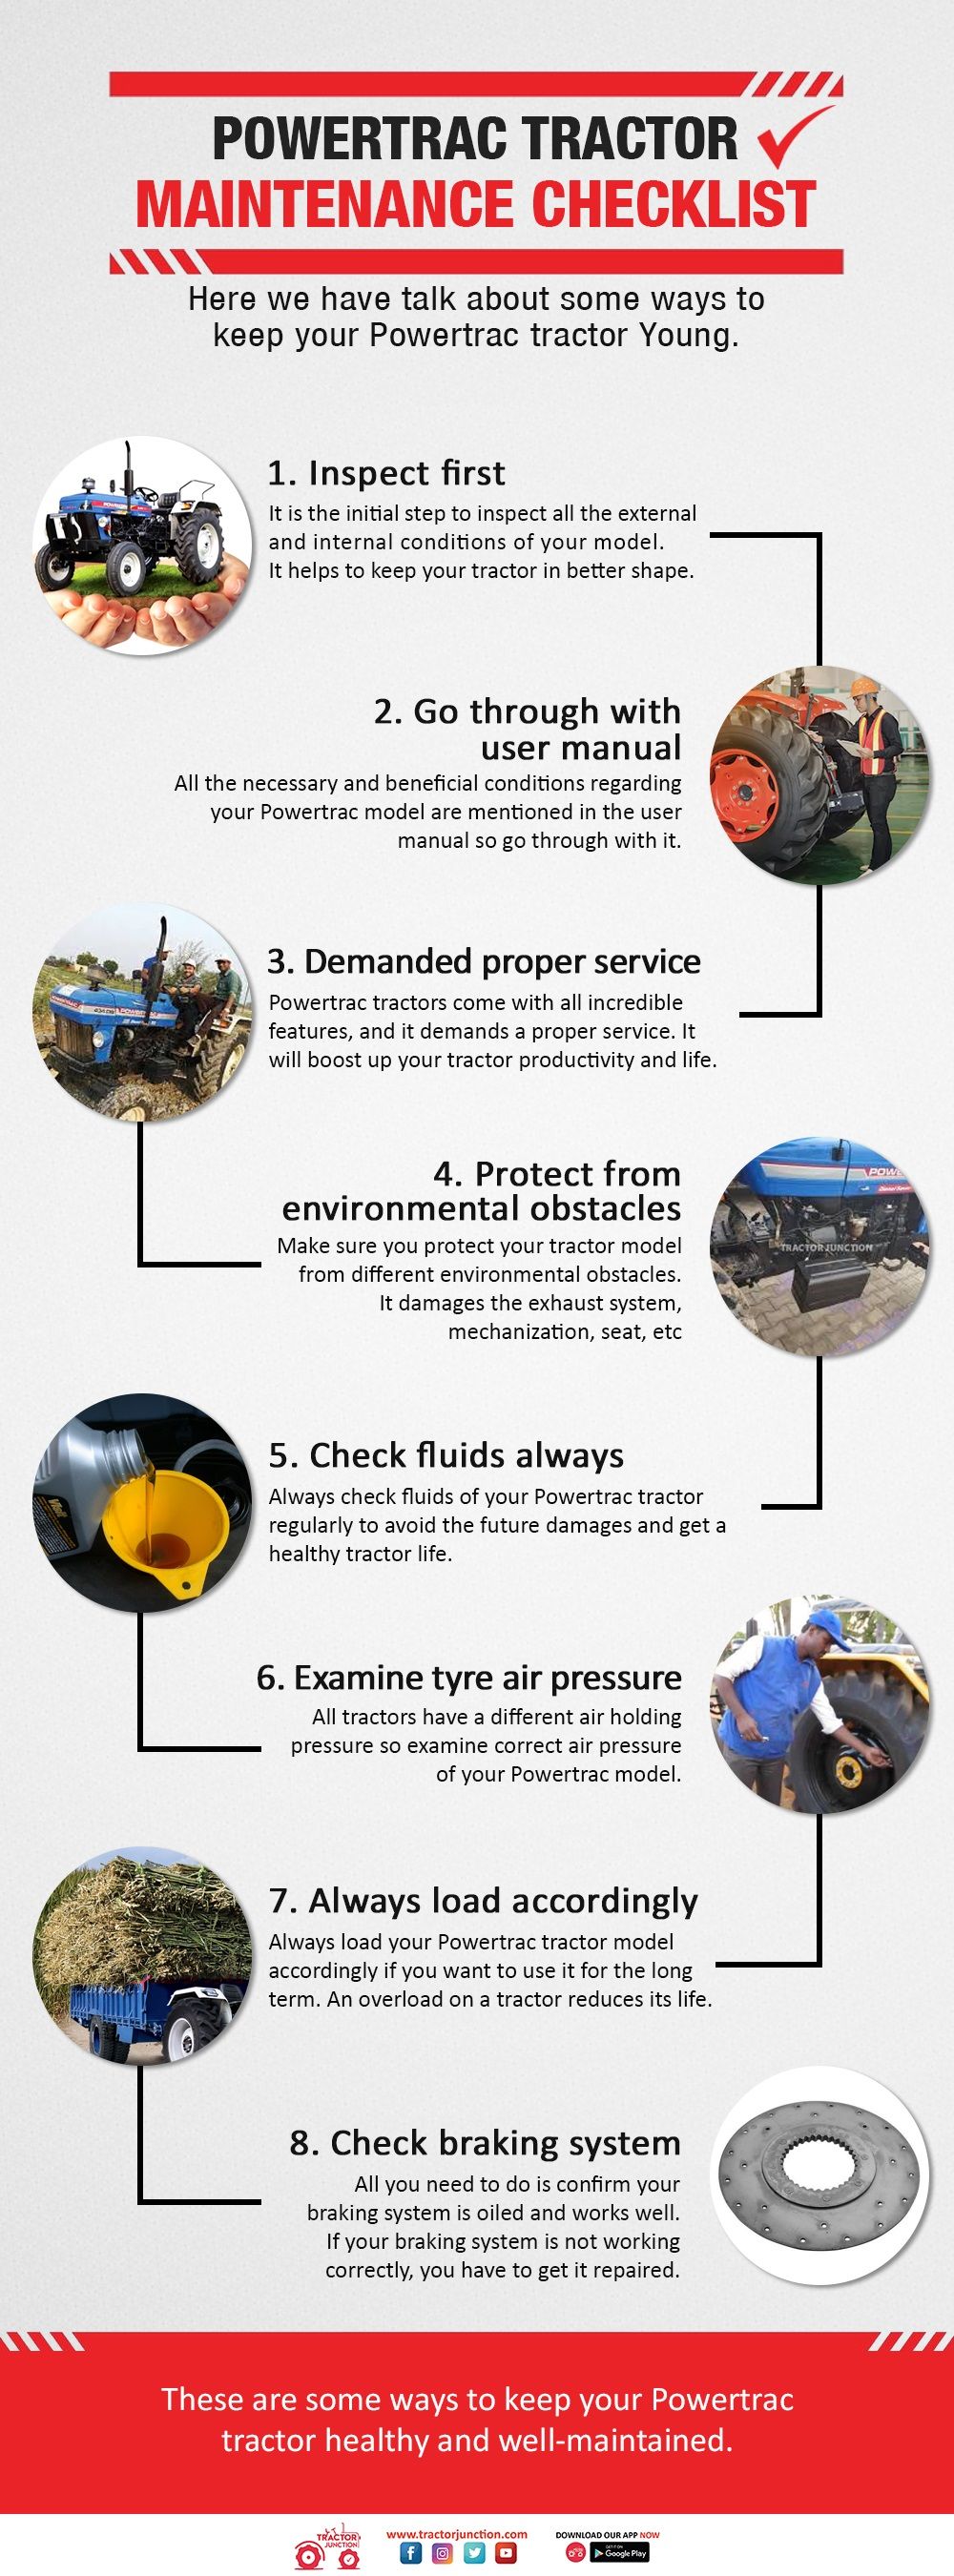 Powertrac Tractor Maintenance Checklist - Infographic